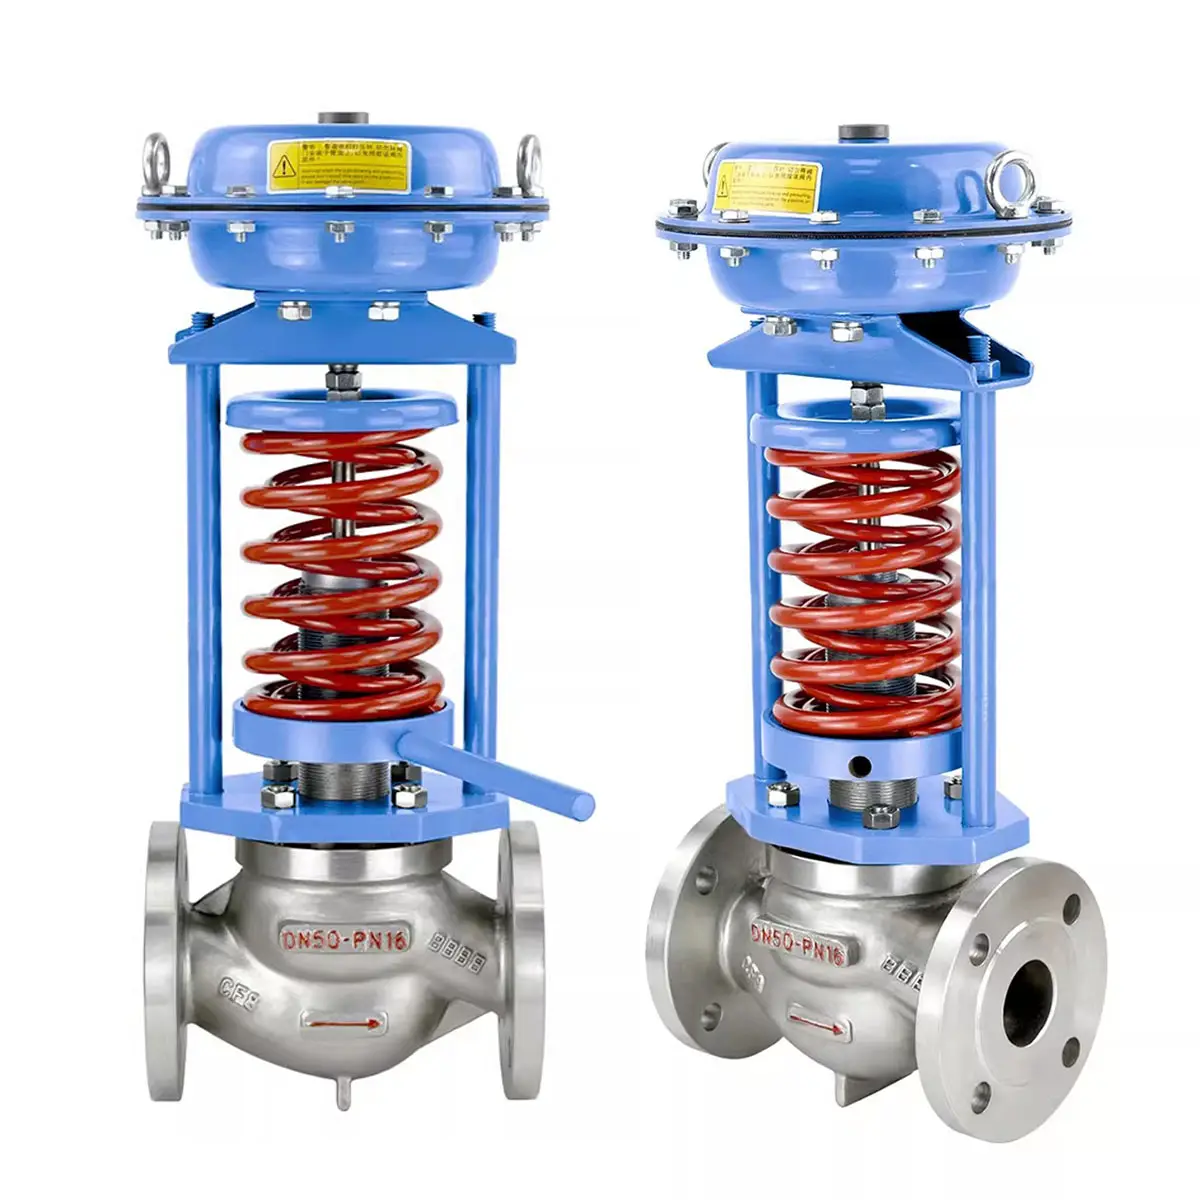 Reflux control regulating valve stainless steel flange gas regulating valve